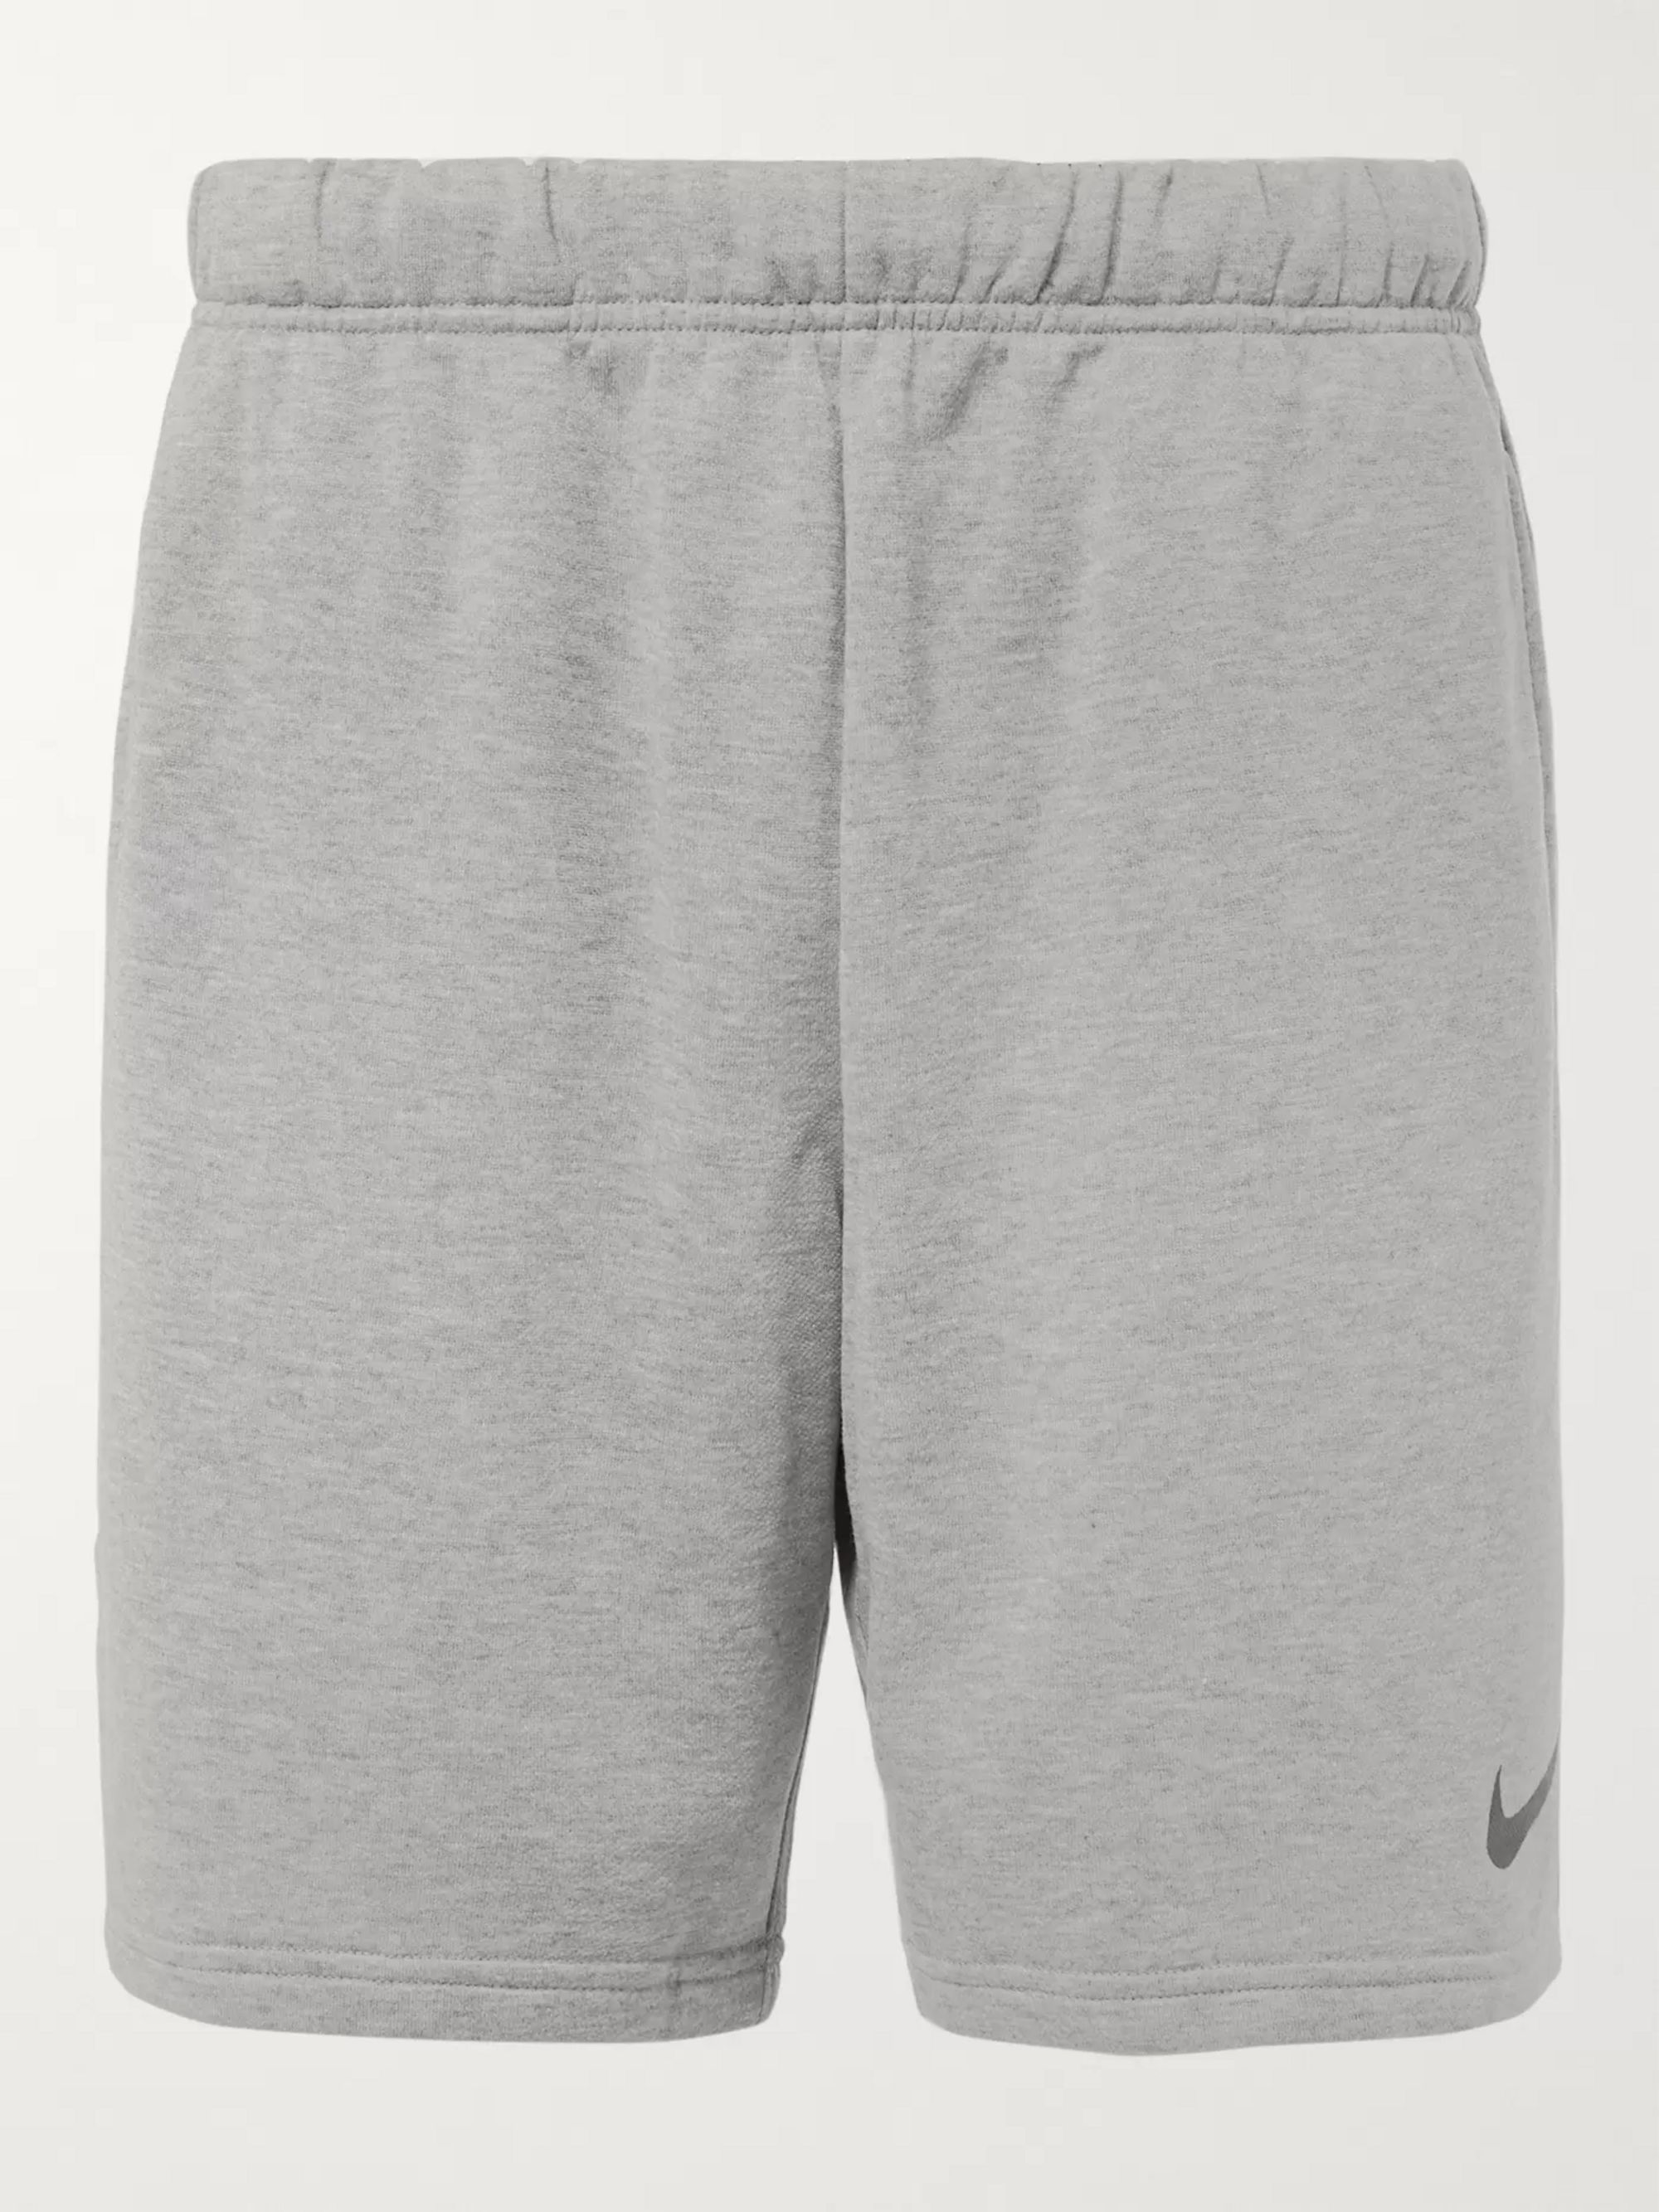 nike gray fleece shorts